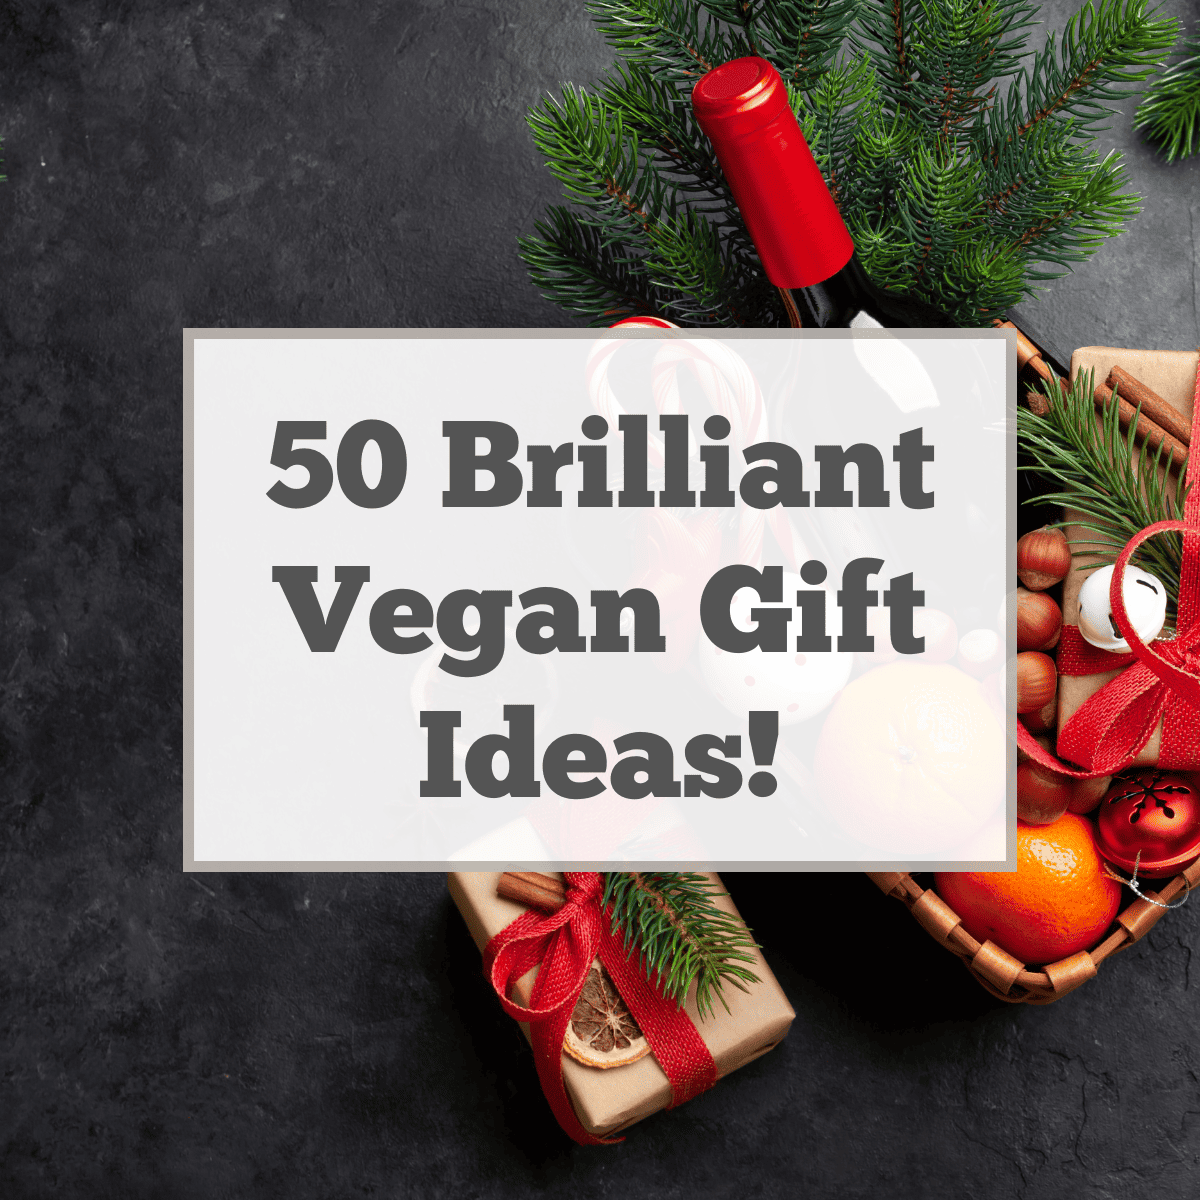 50 vegan gift ideas featured image.